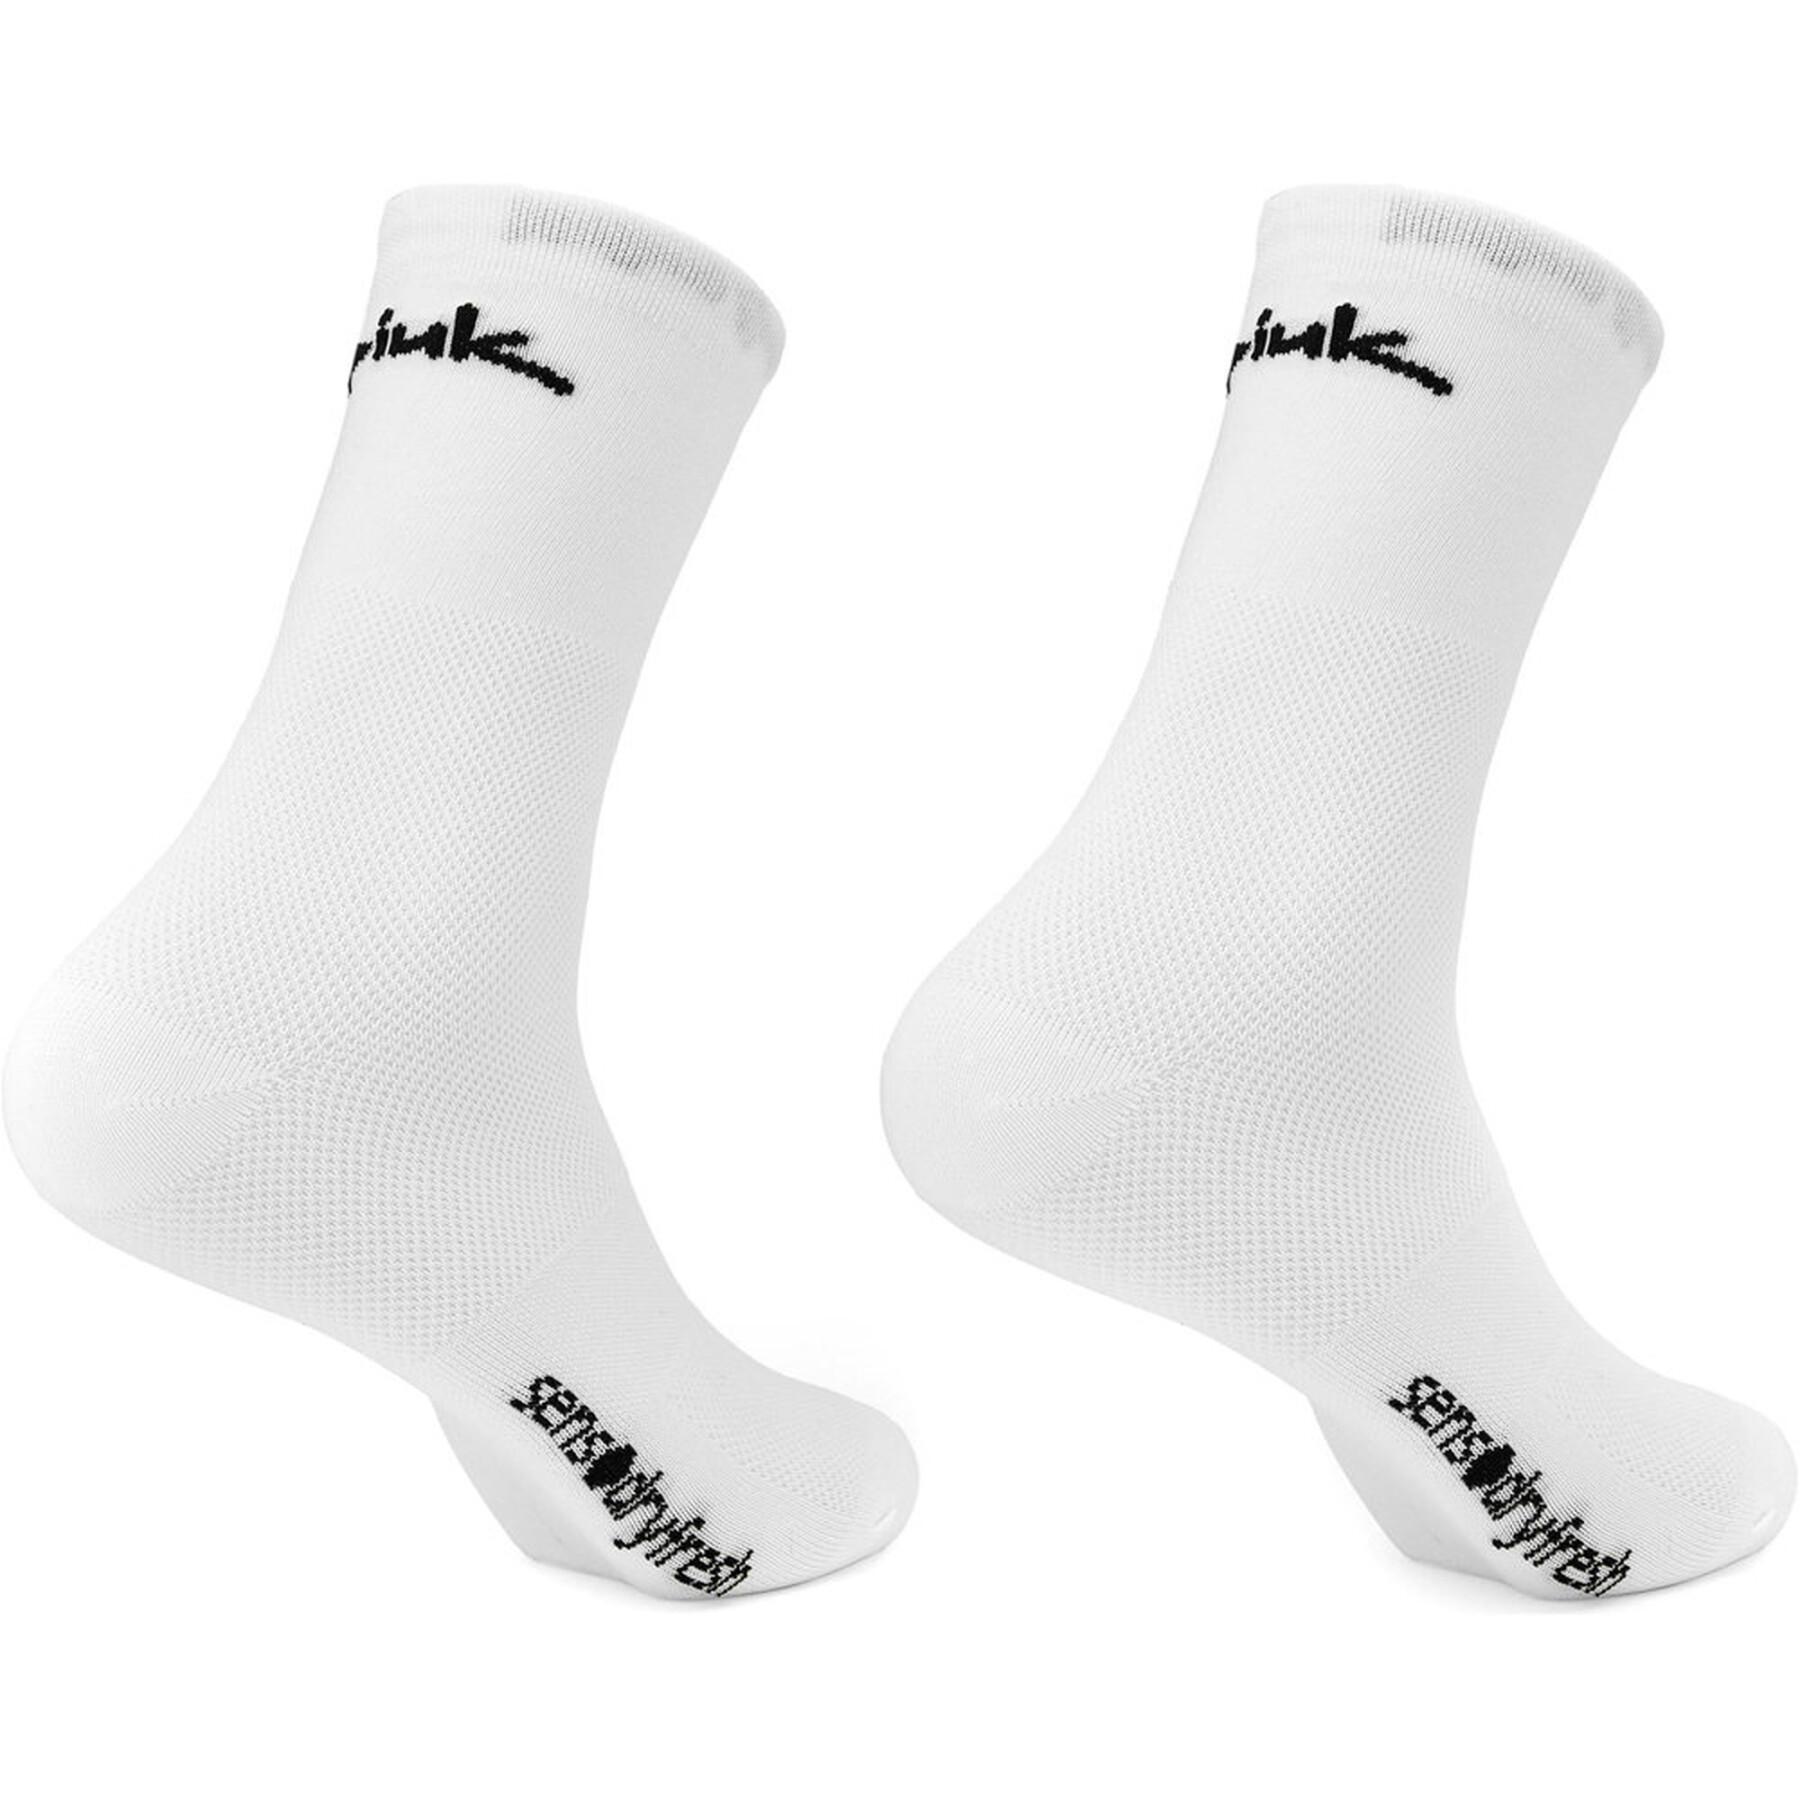 Set of 2 pairs of medium socks Spiuk Anatomic